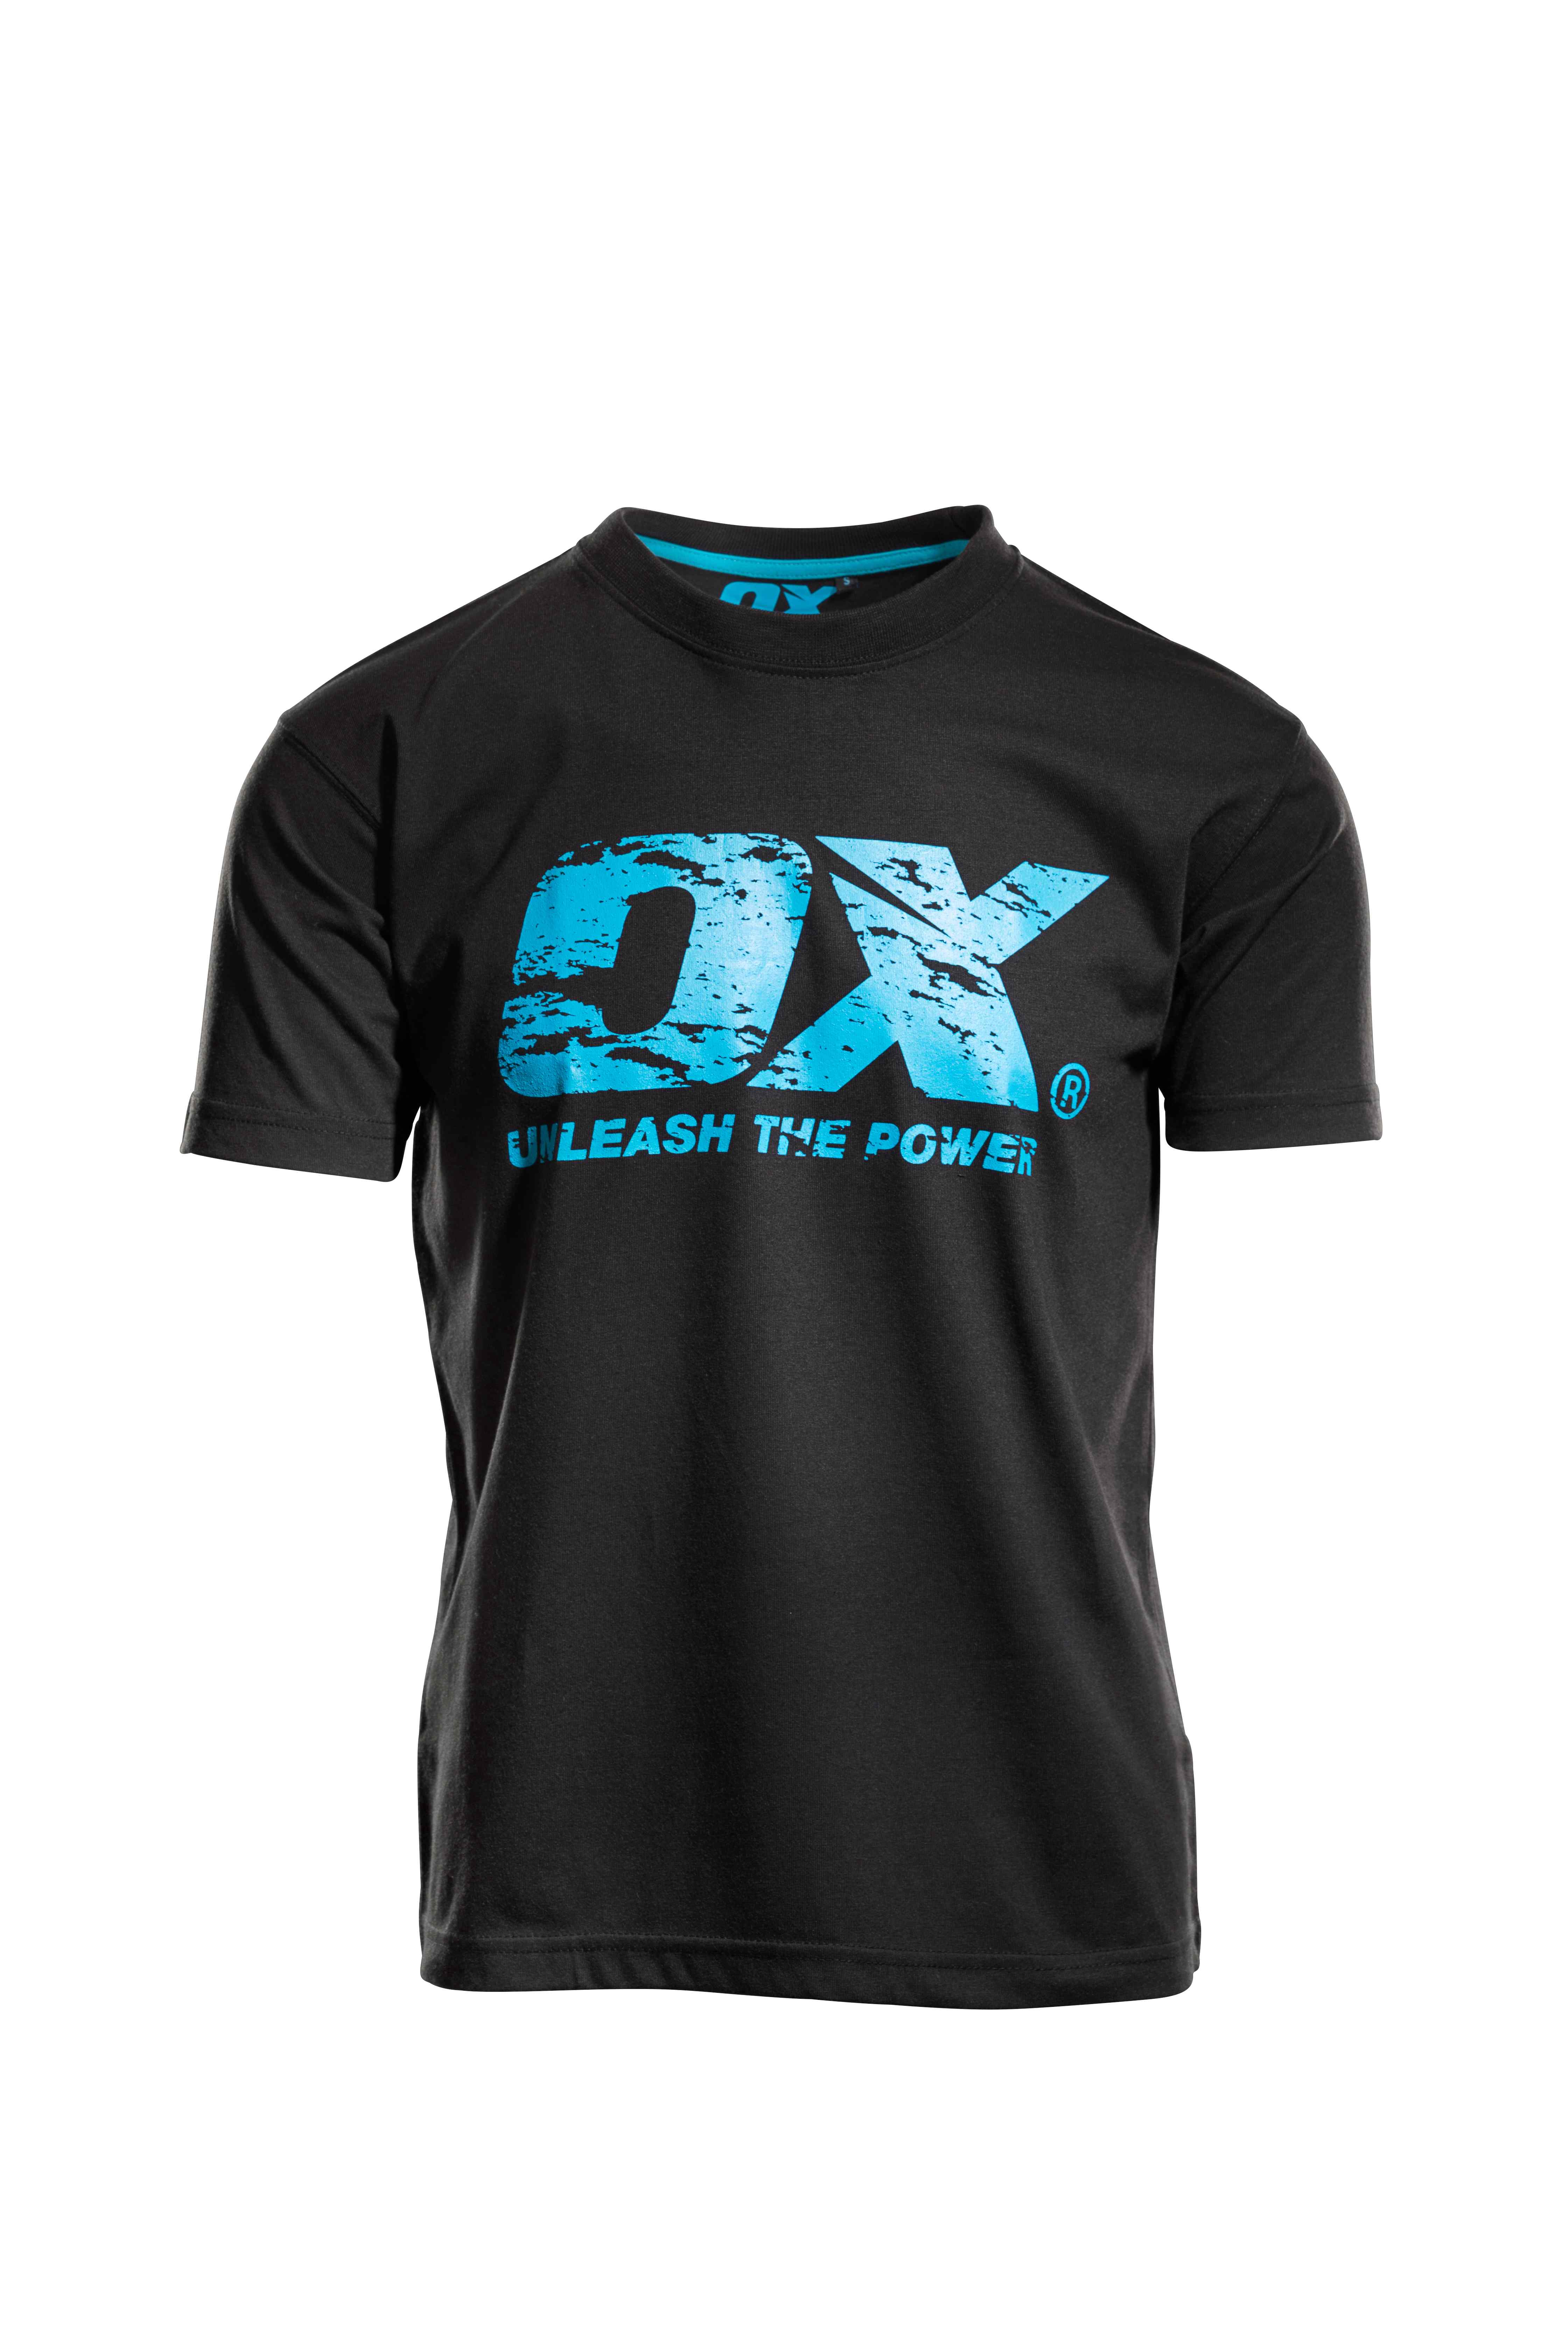 OX Crew Neck T shirt - L - Black